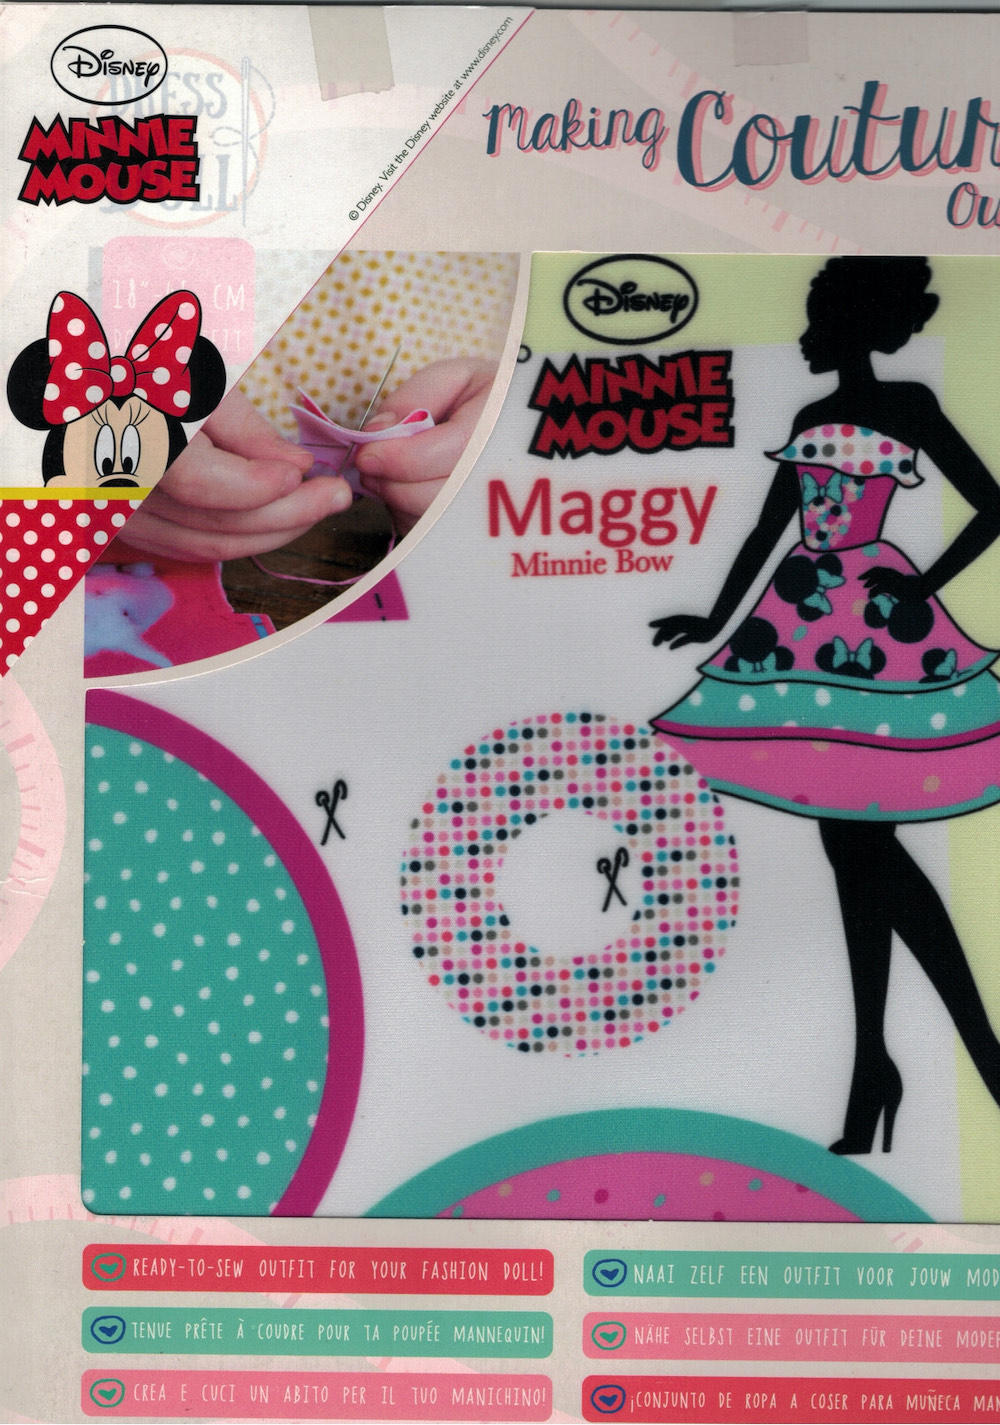 Dress your Doll  Nähe selbst ein Outfit für Deine Mode Puppe!  29cm  Disney Minnie Mouse  Maggy  Minnie Bow